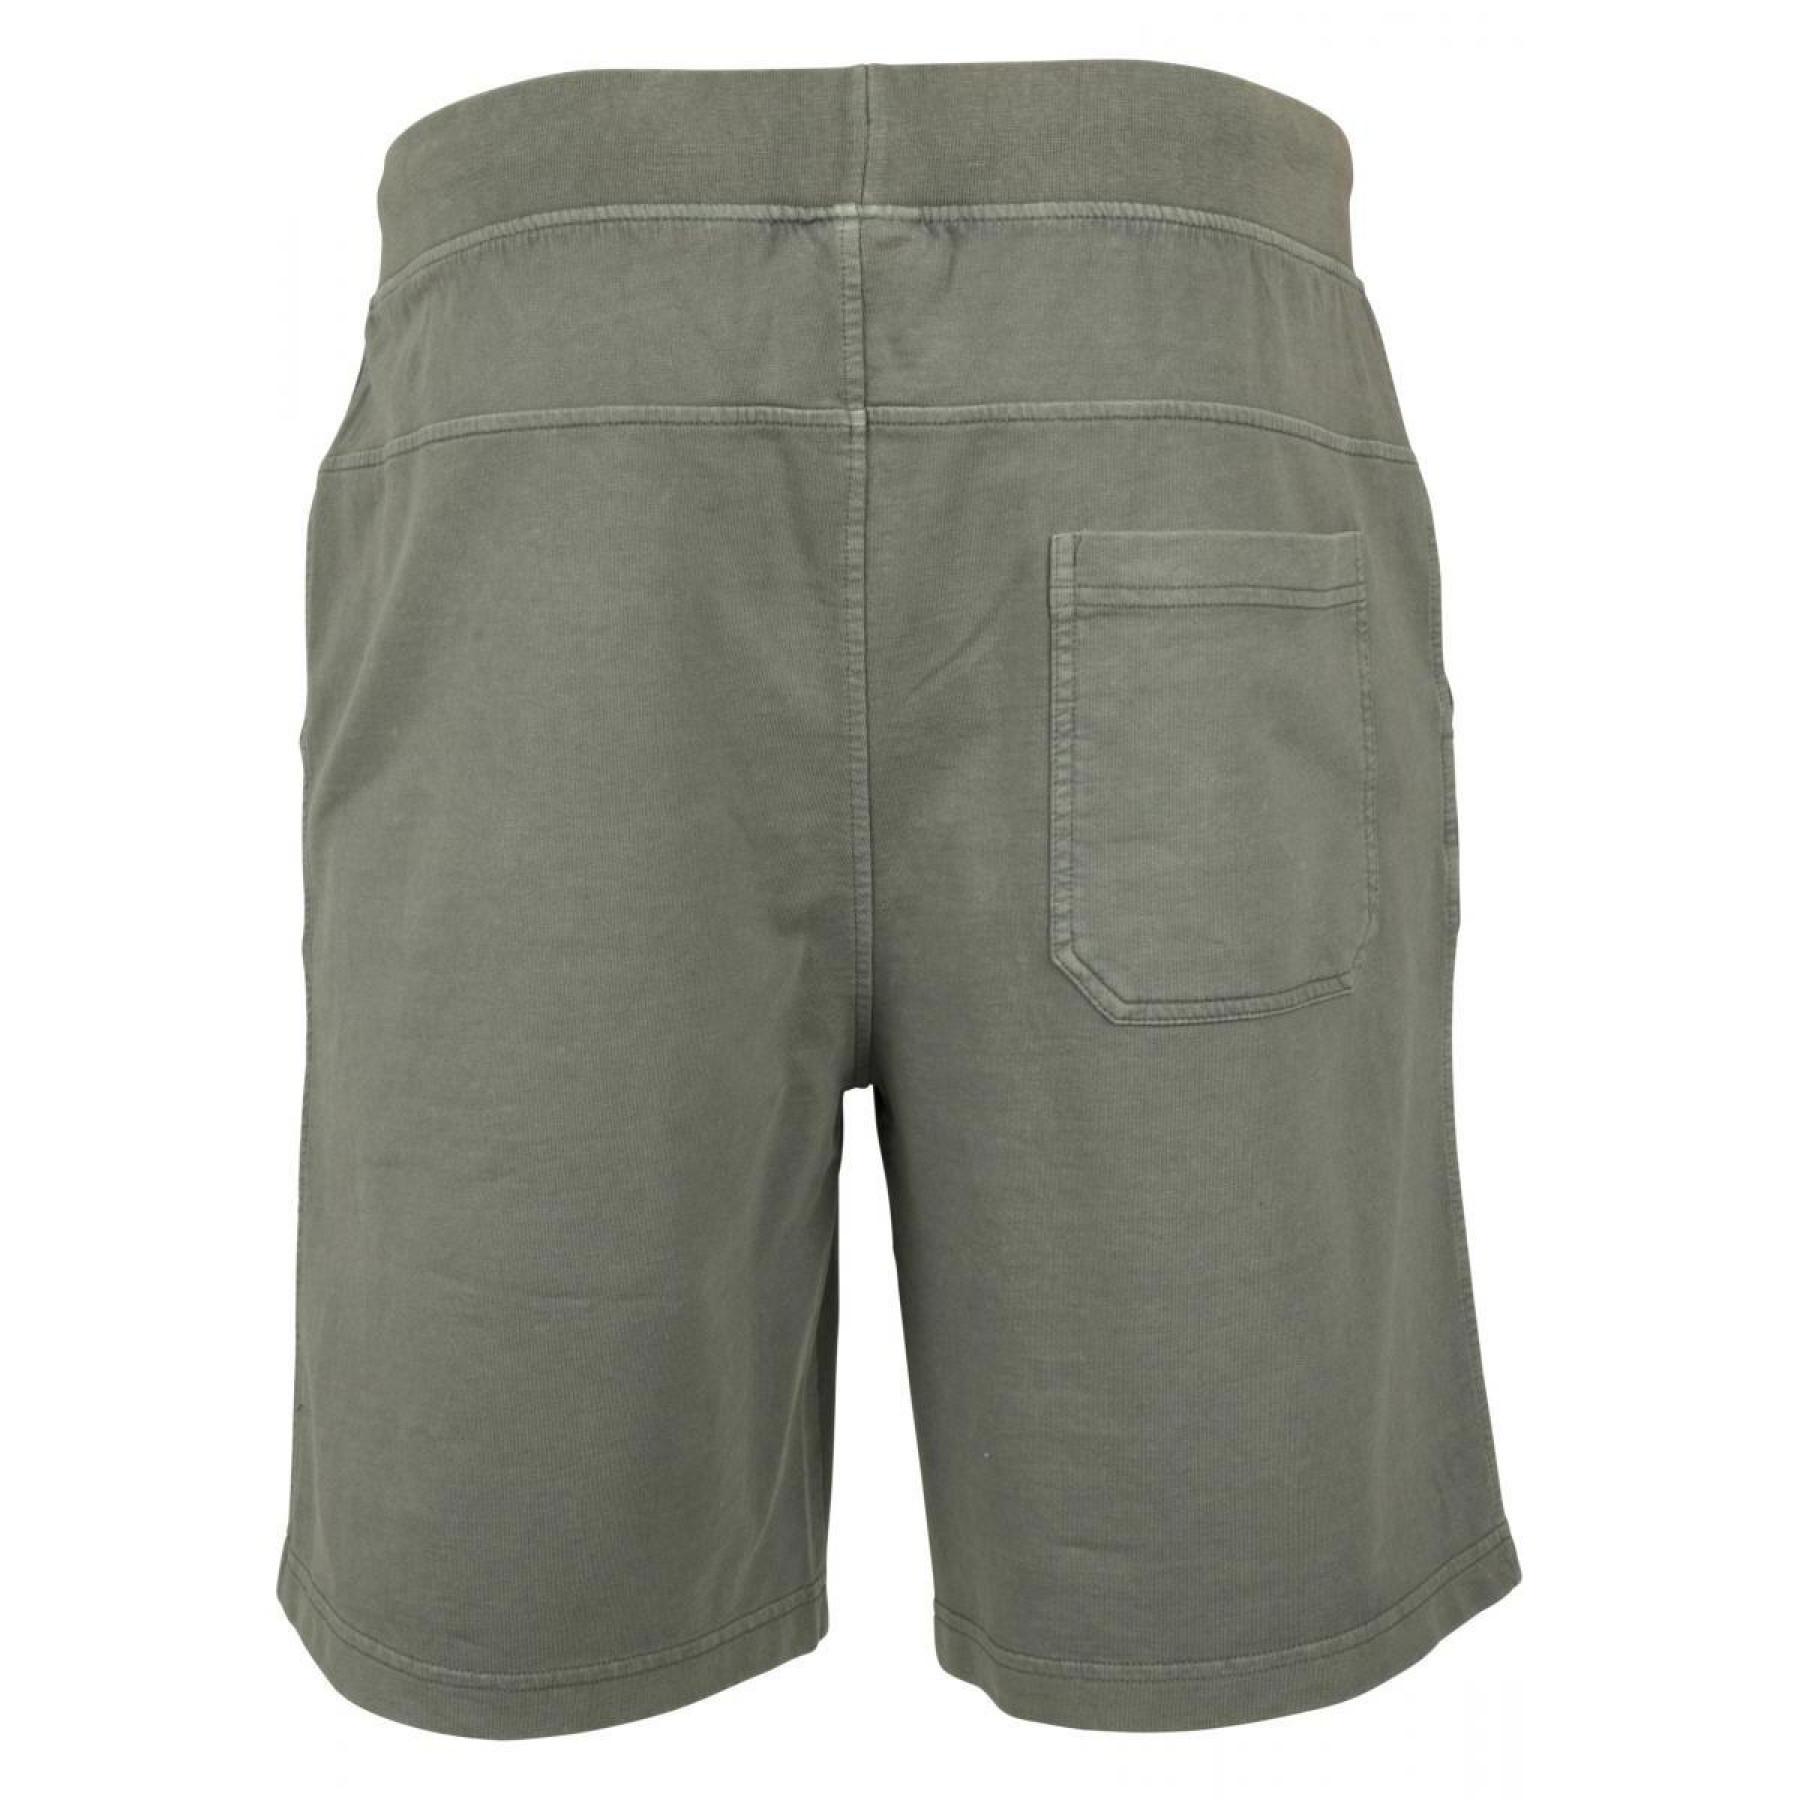 Pantalones cortos urbanos desteñidos